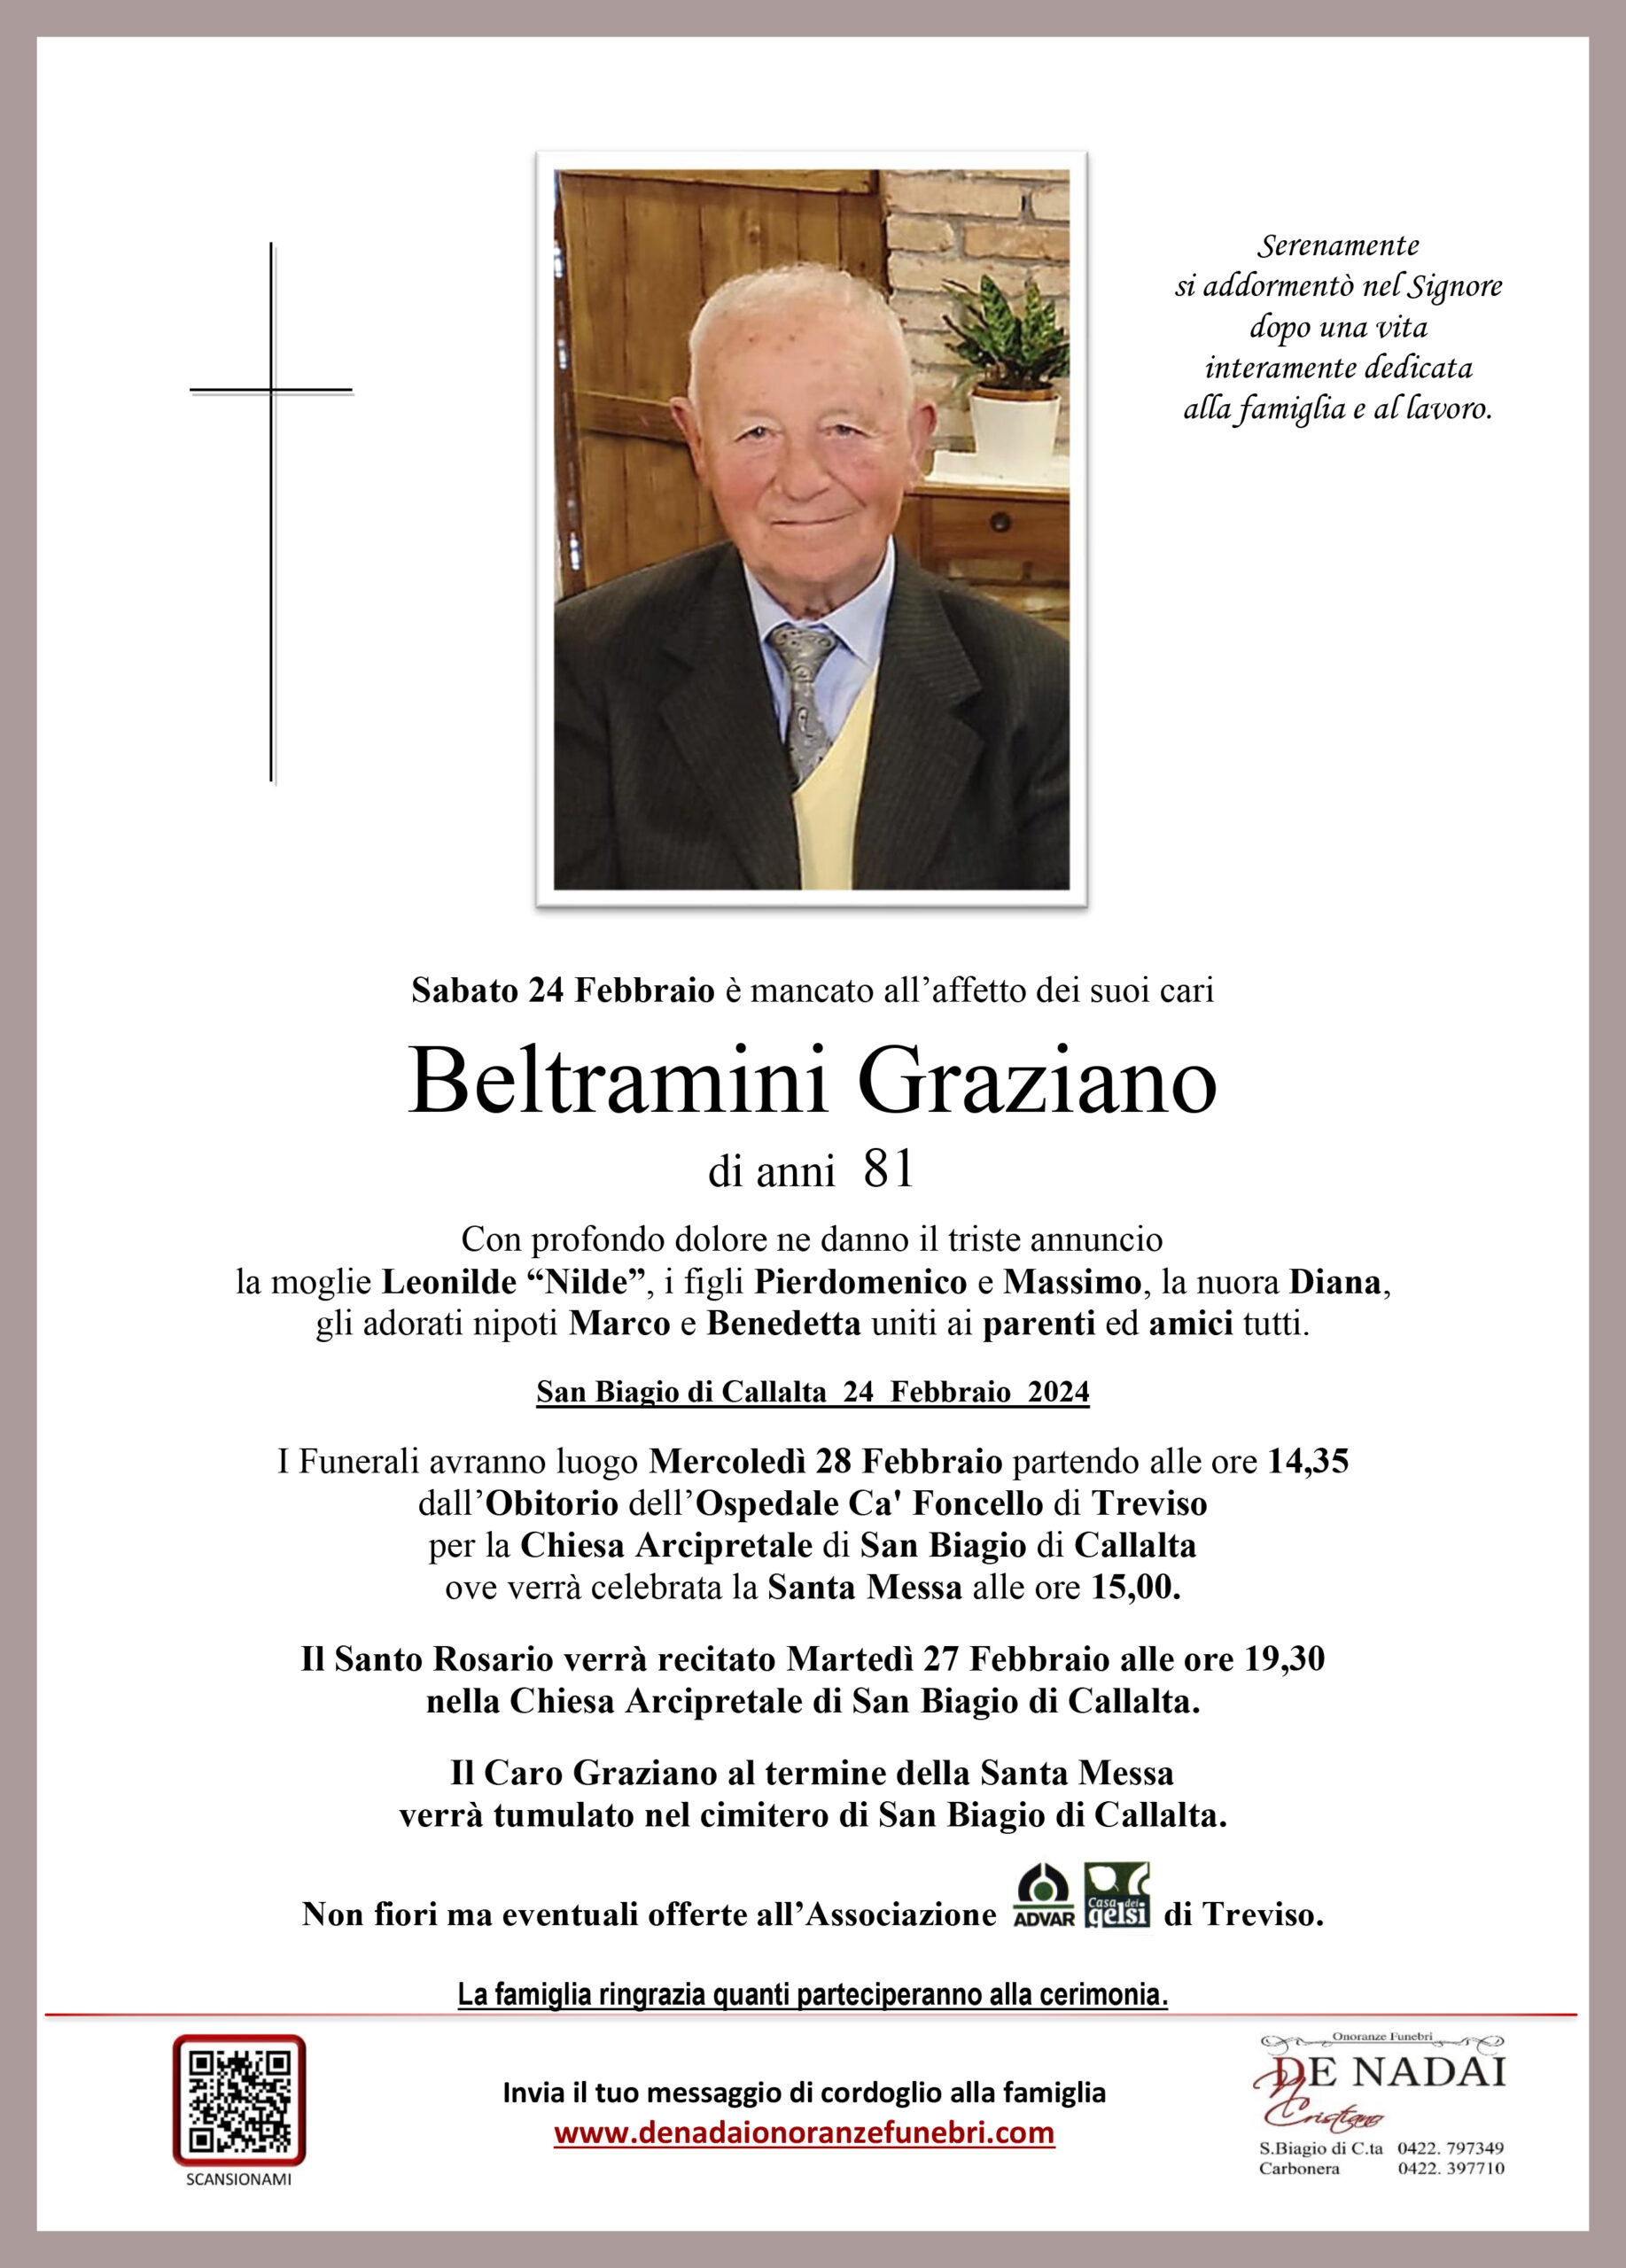 Beltramini Graziano